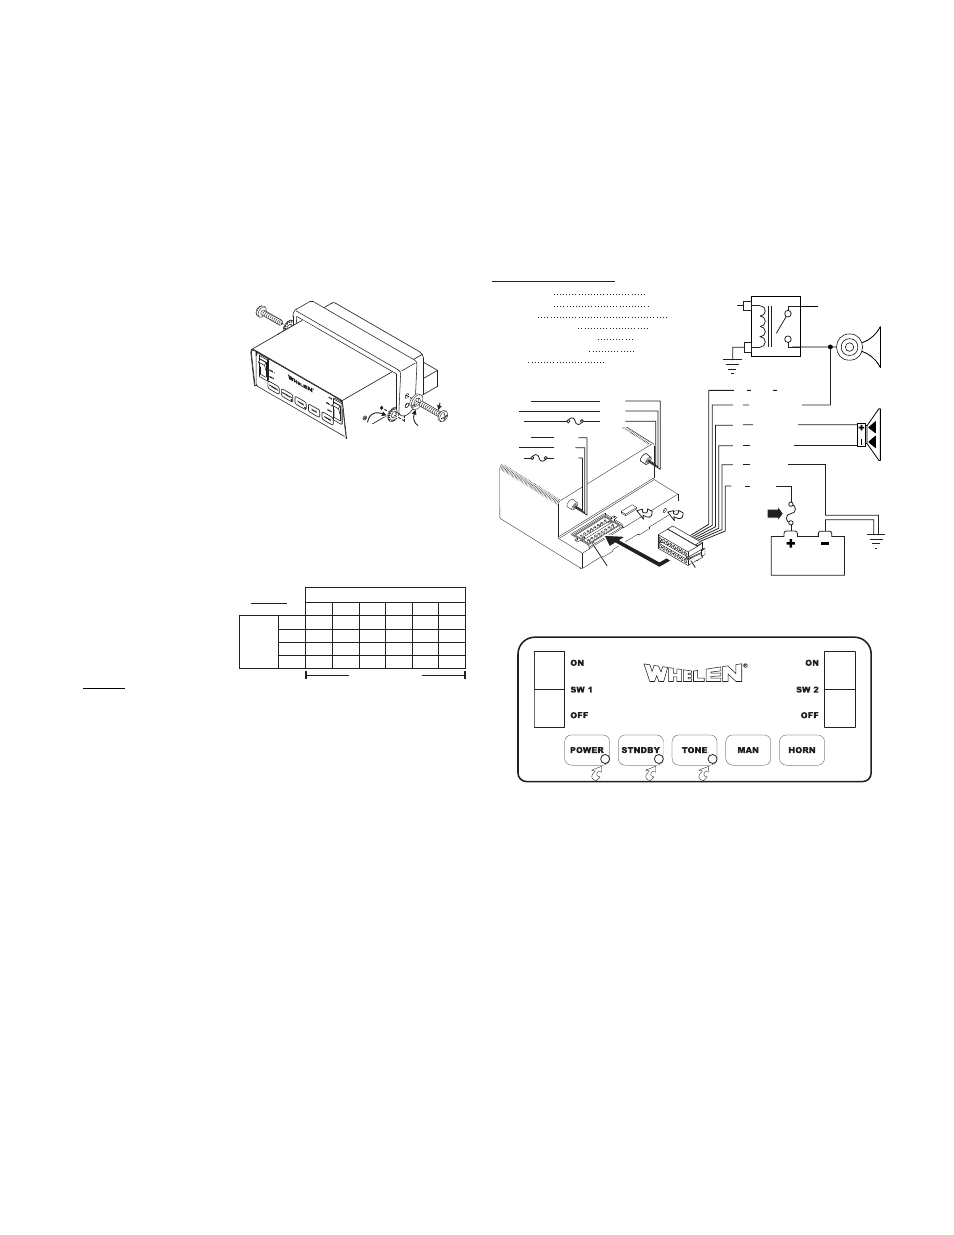 Front panel, Wiring, Mounting | Whelen GAMMA2 User Manual | Page 2 / 3  Whelen Gamma 2 Wiring Diagram    Manuals Directory